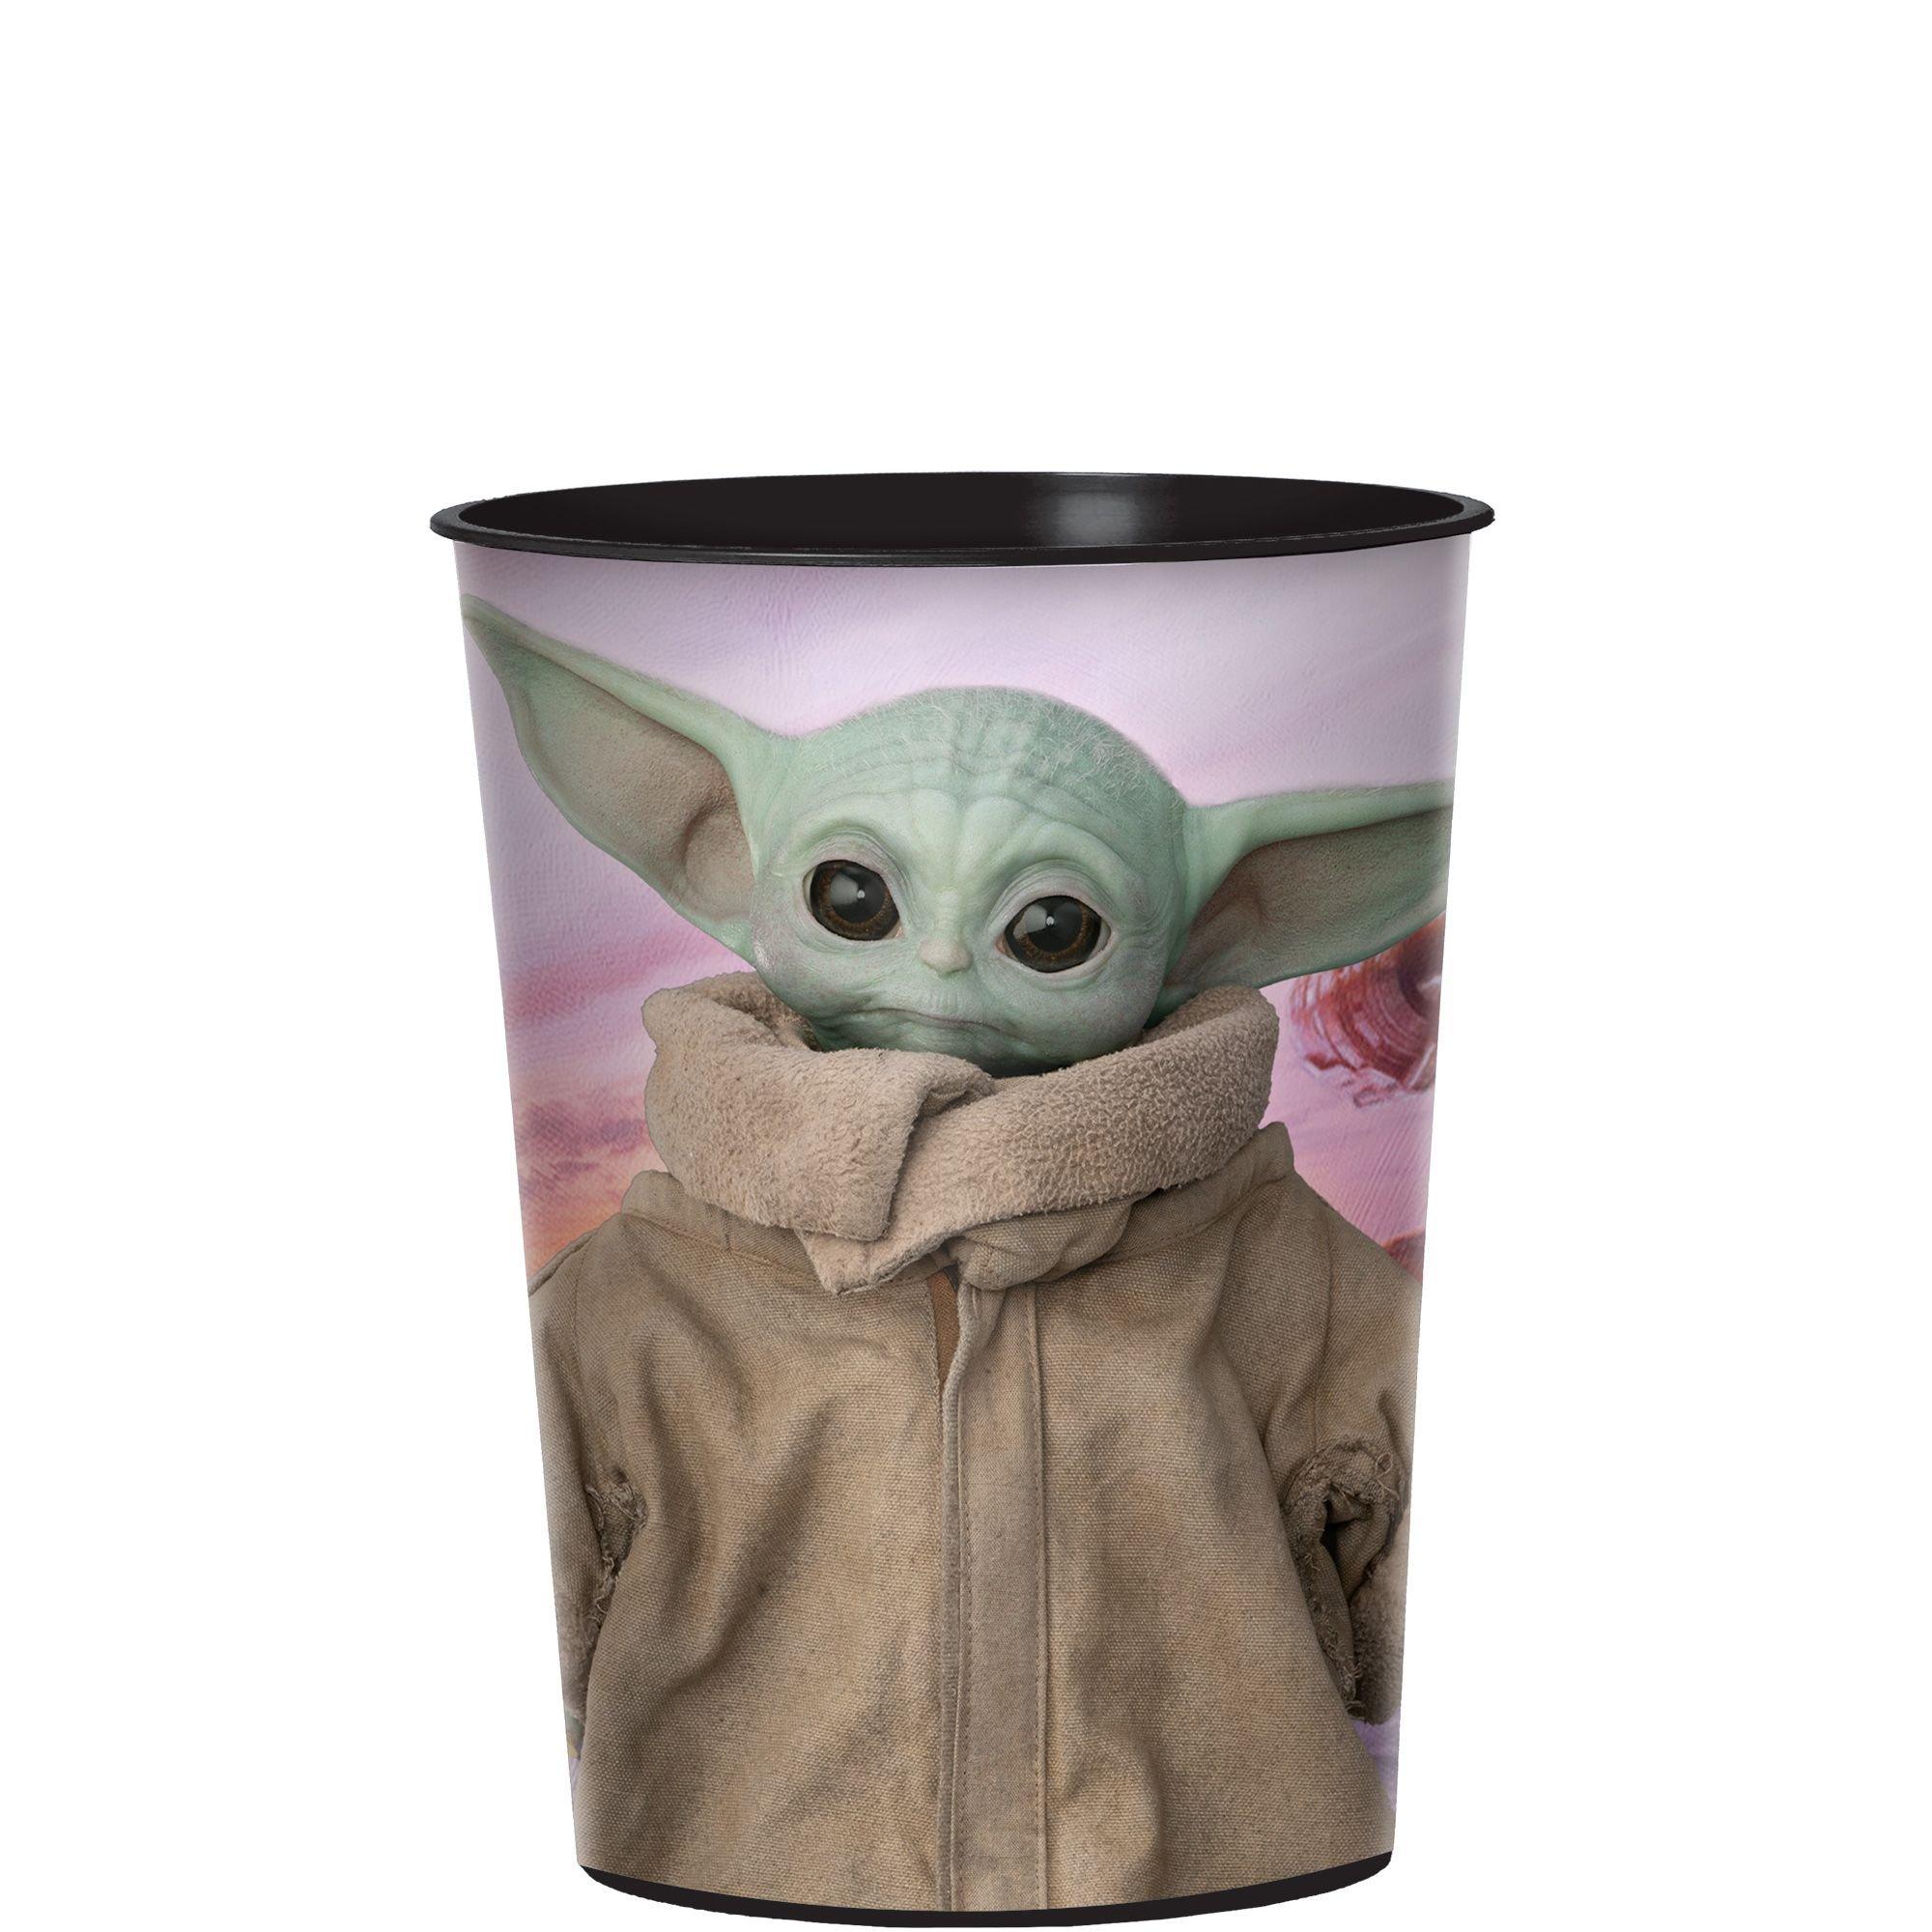 Baby Yoda Coffee Mug! Graduation, Cute Gift for Her Him Star Wars